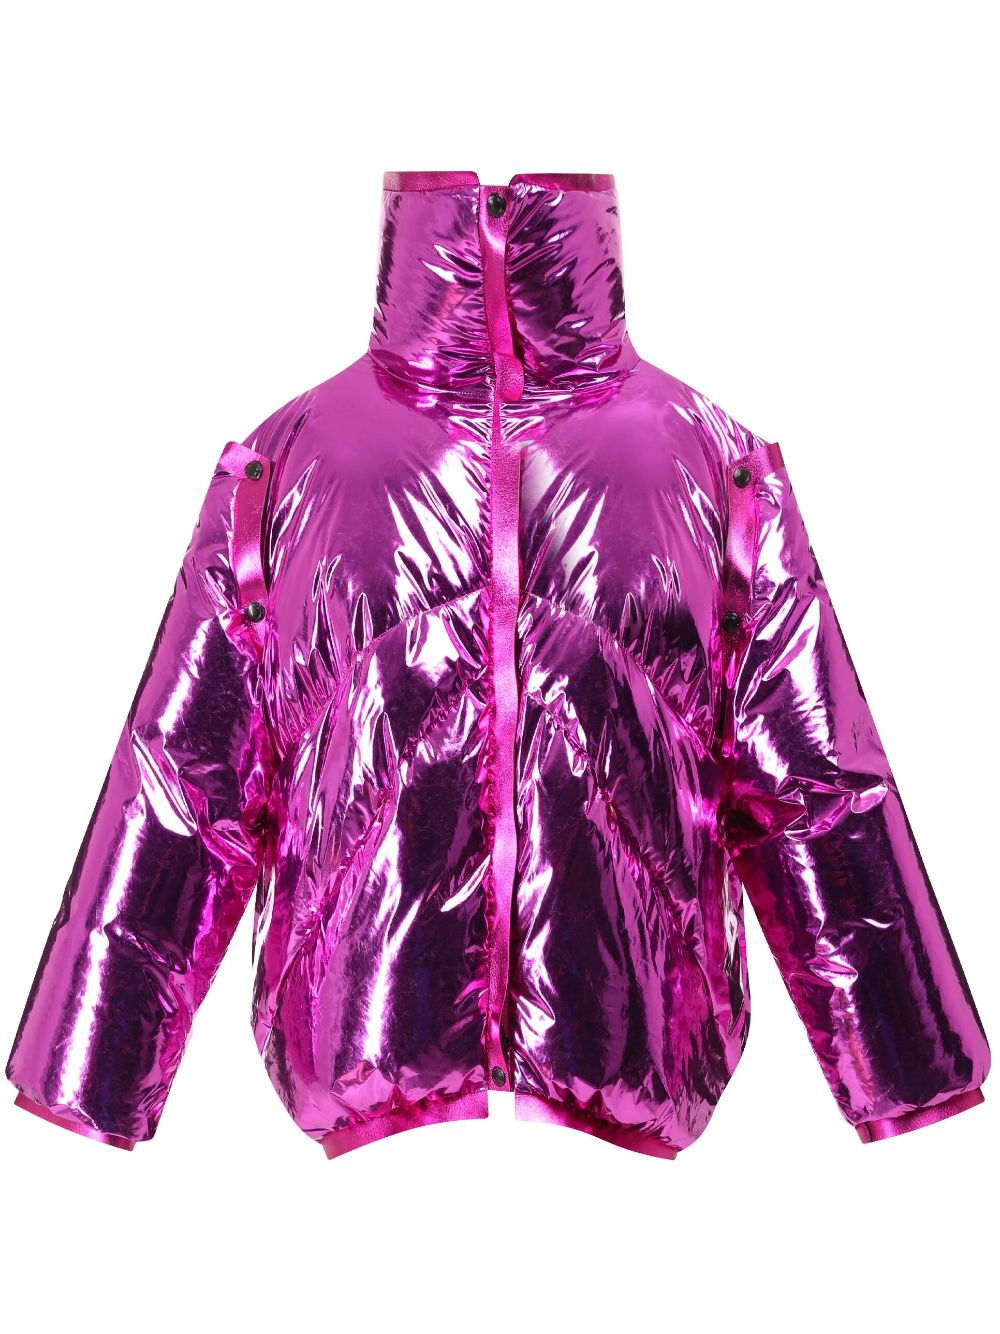 TOM FORD metallic puffer jacket - Pink von TOM FORD